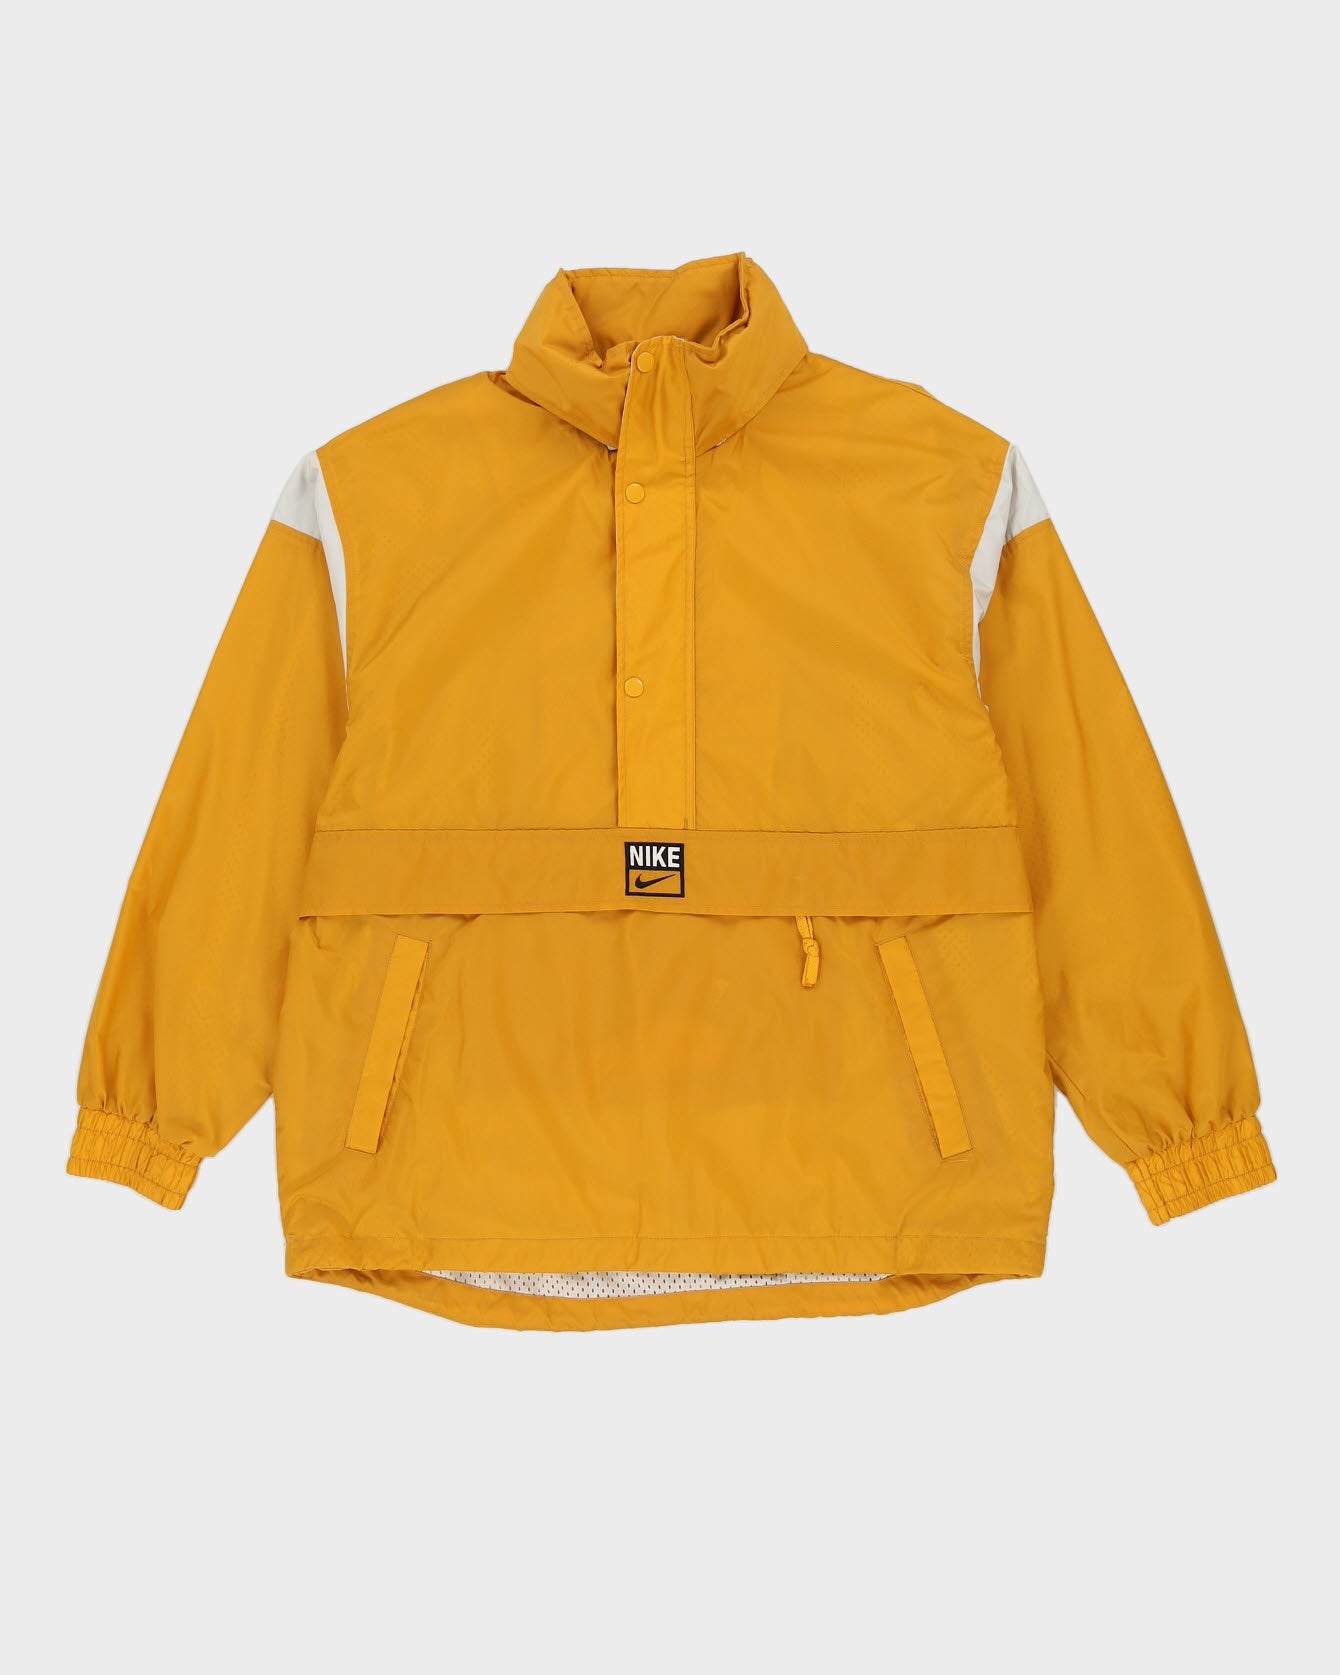 Vintage 90s Nike Yellow Quarter Zip Windbreaker Jacket - M